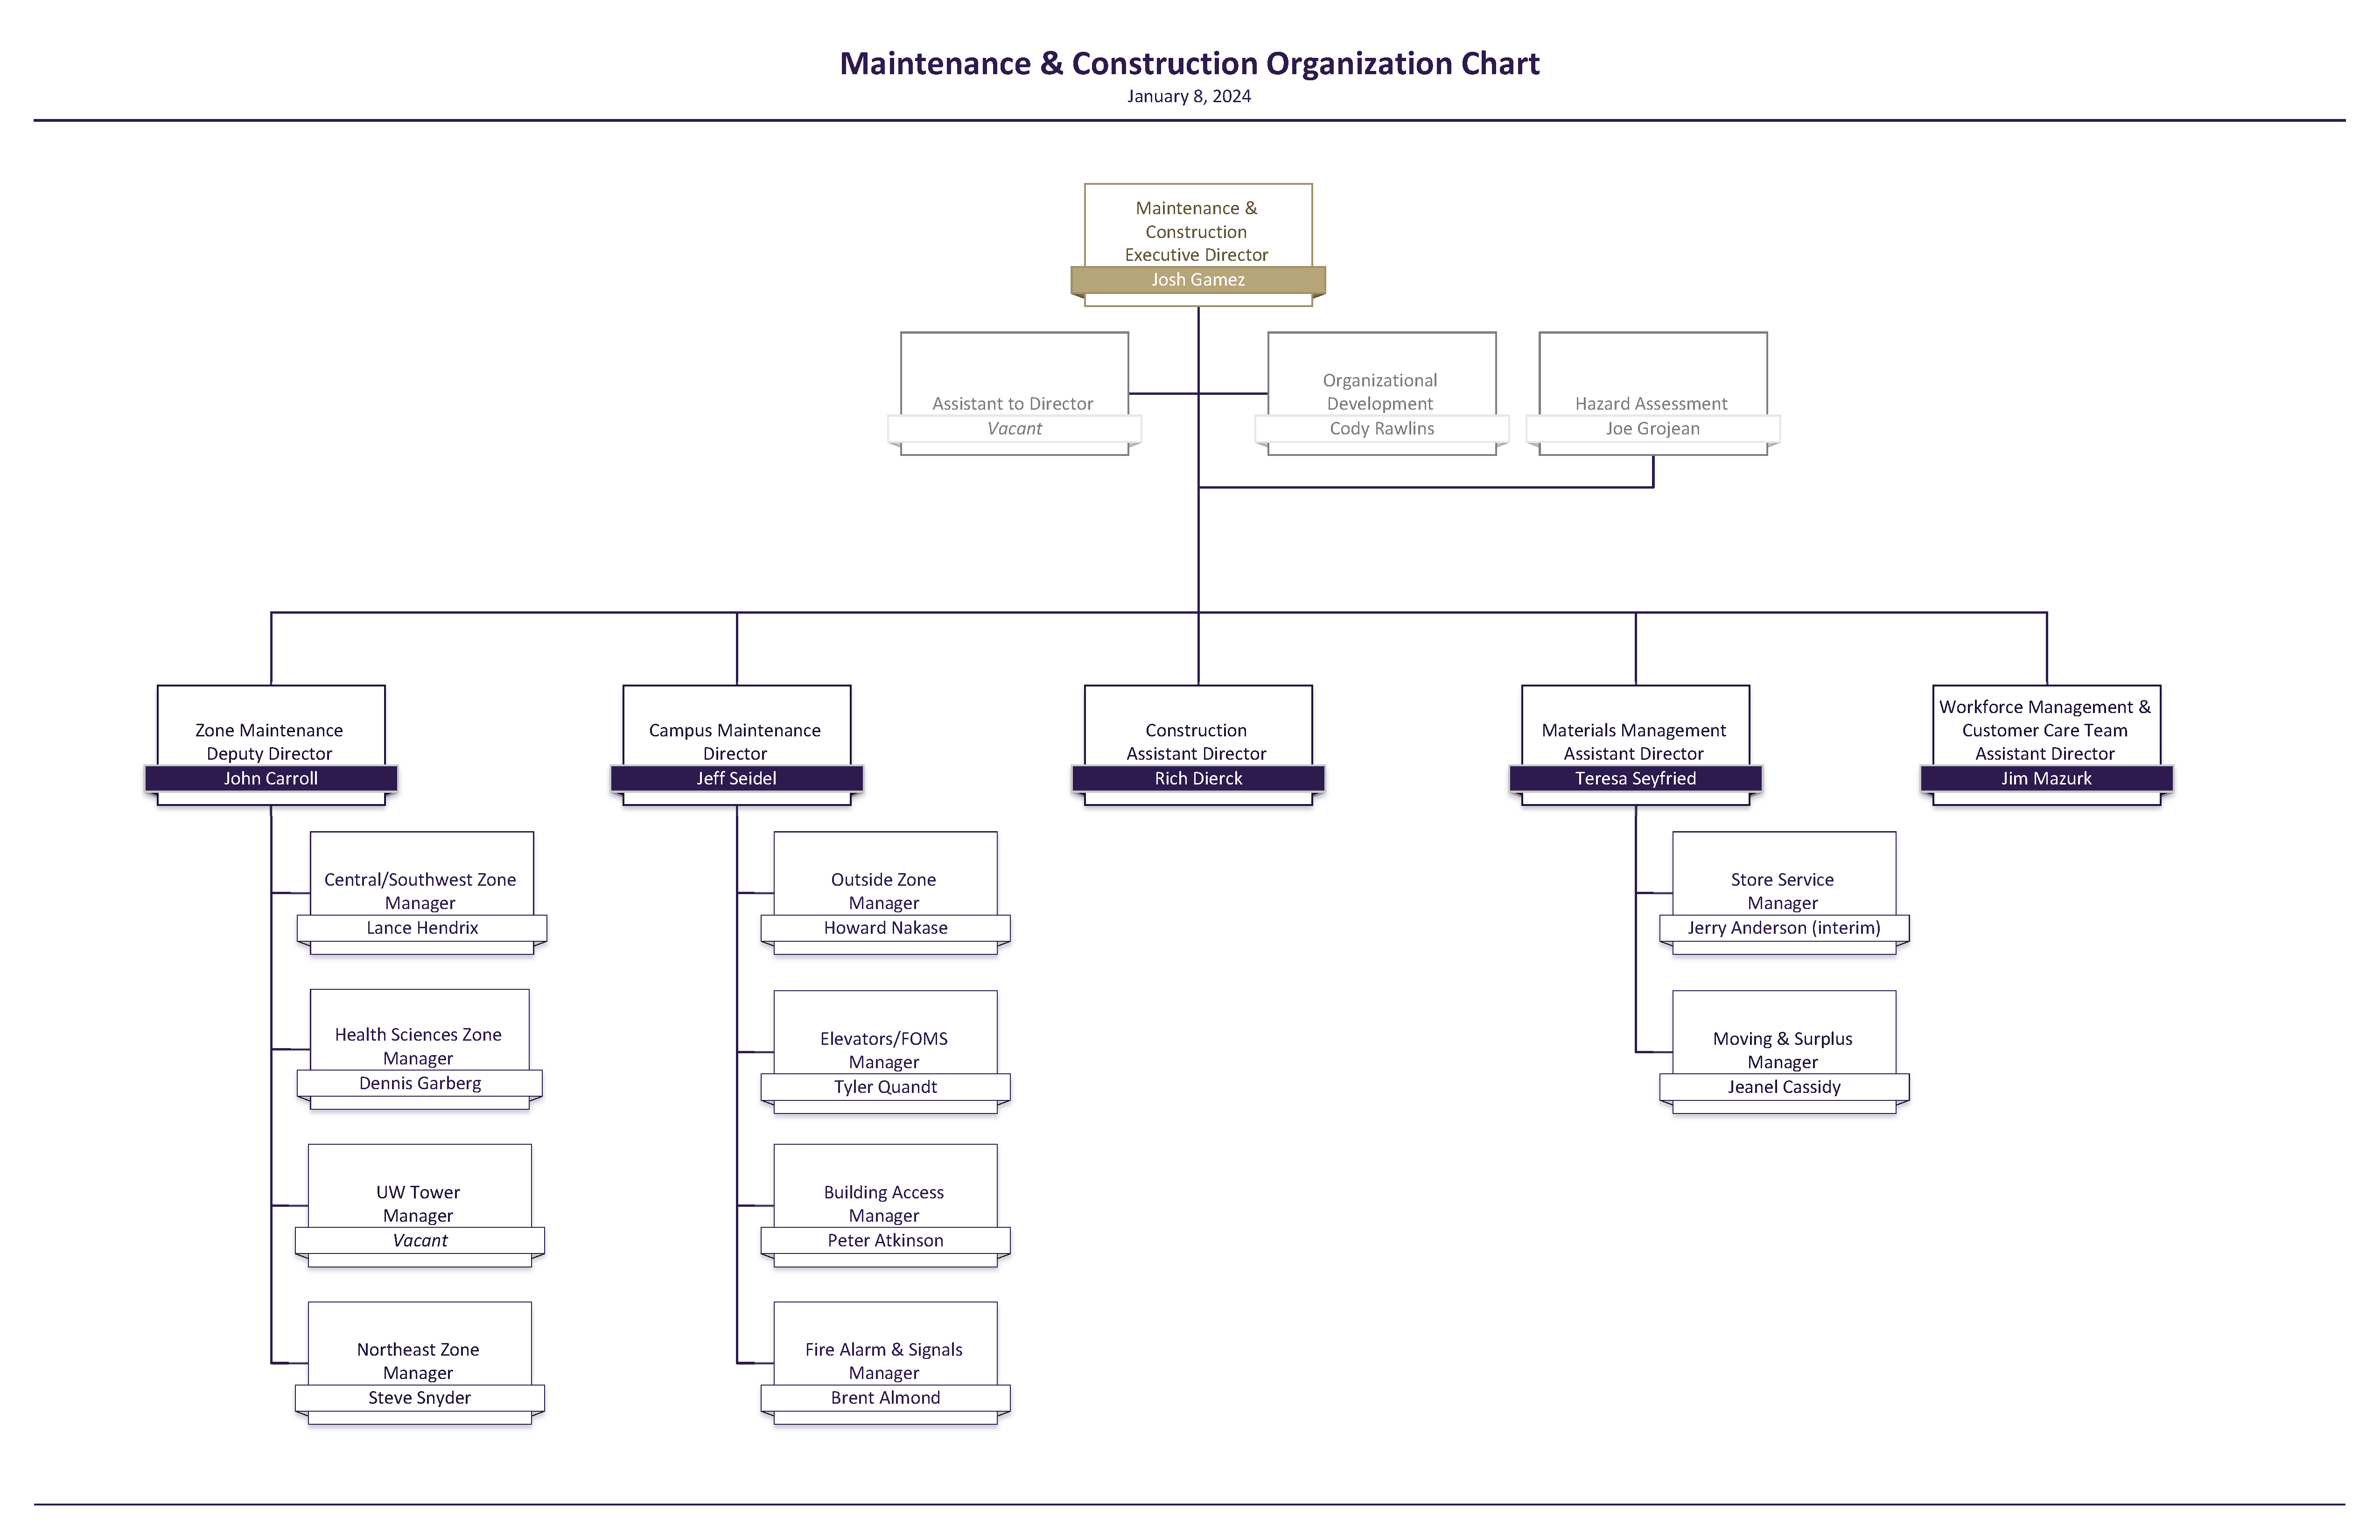 Maintenance & Construction organization chart